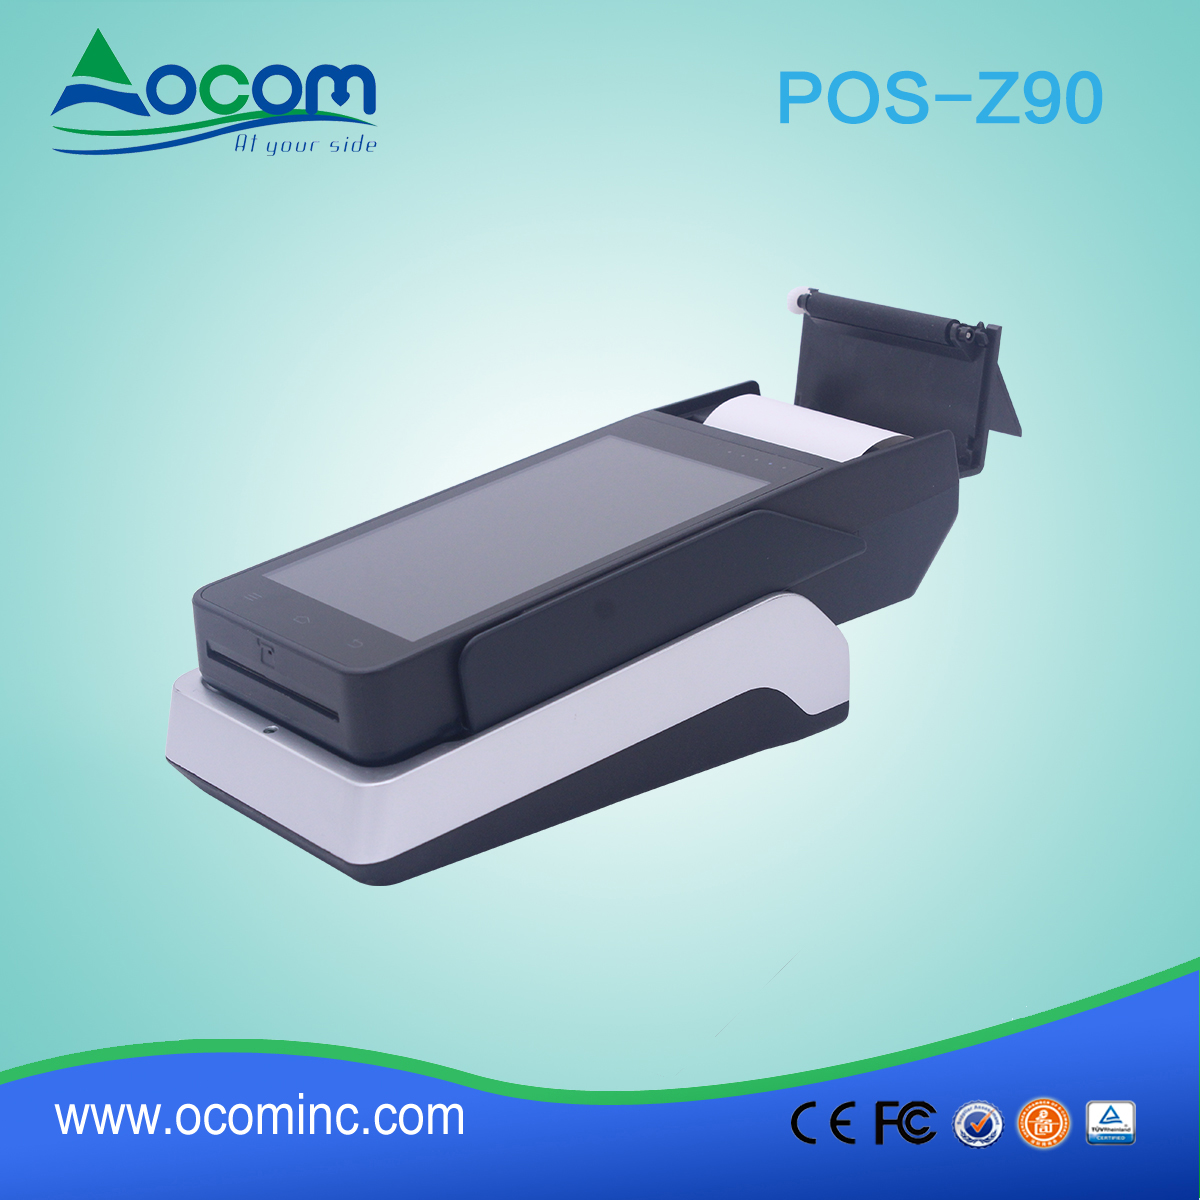 OCOM POS-Z90 όλα σε ένα φορητό τερματικό ανδροειδές pos με εκτυπωτή και συσκευή ανάγνωσης nfc